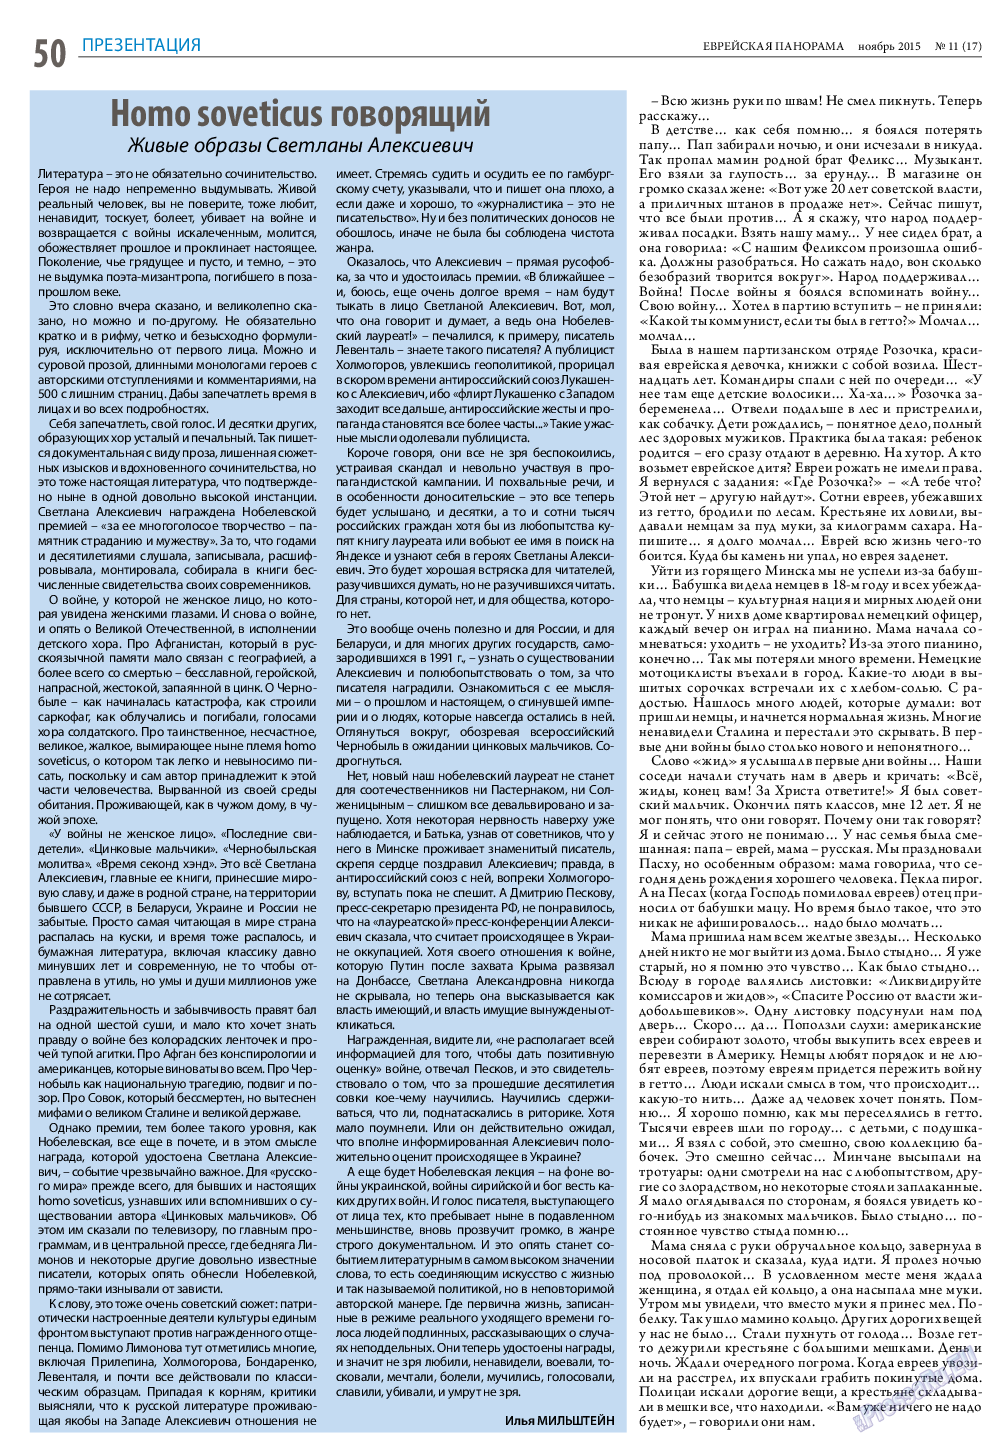 Еврейская панорама, газета. 2015 №11 стр.50